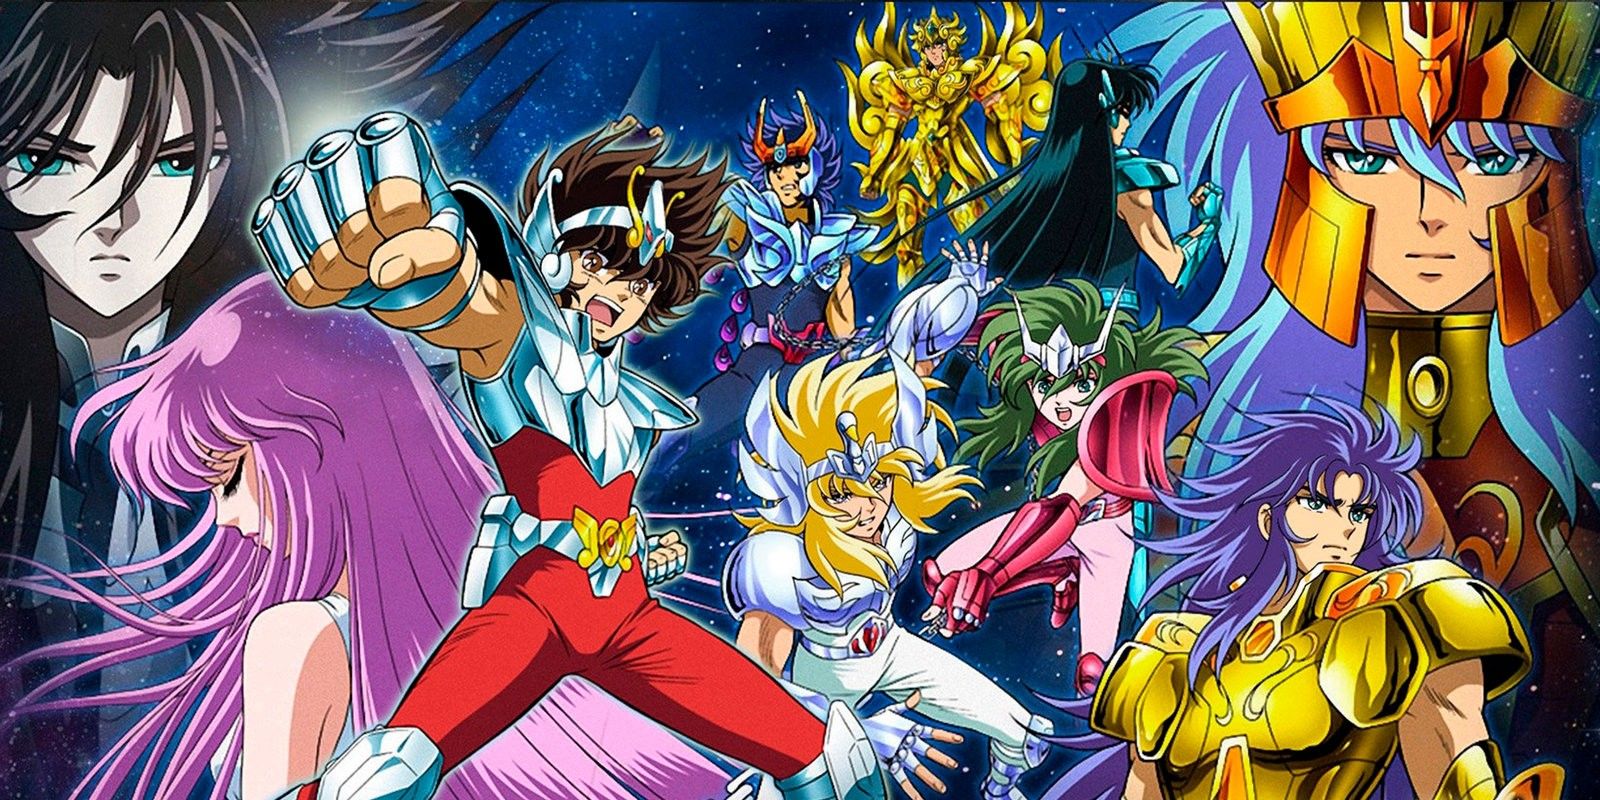 The main characters from the 1980s anime Saint Seiya. 